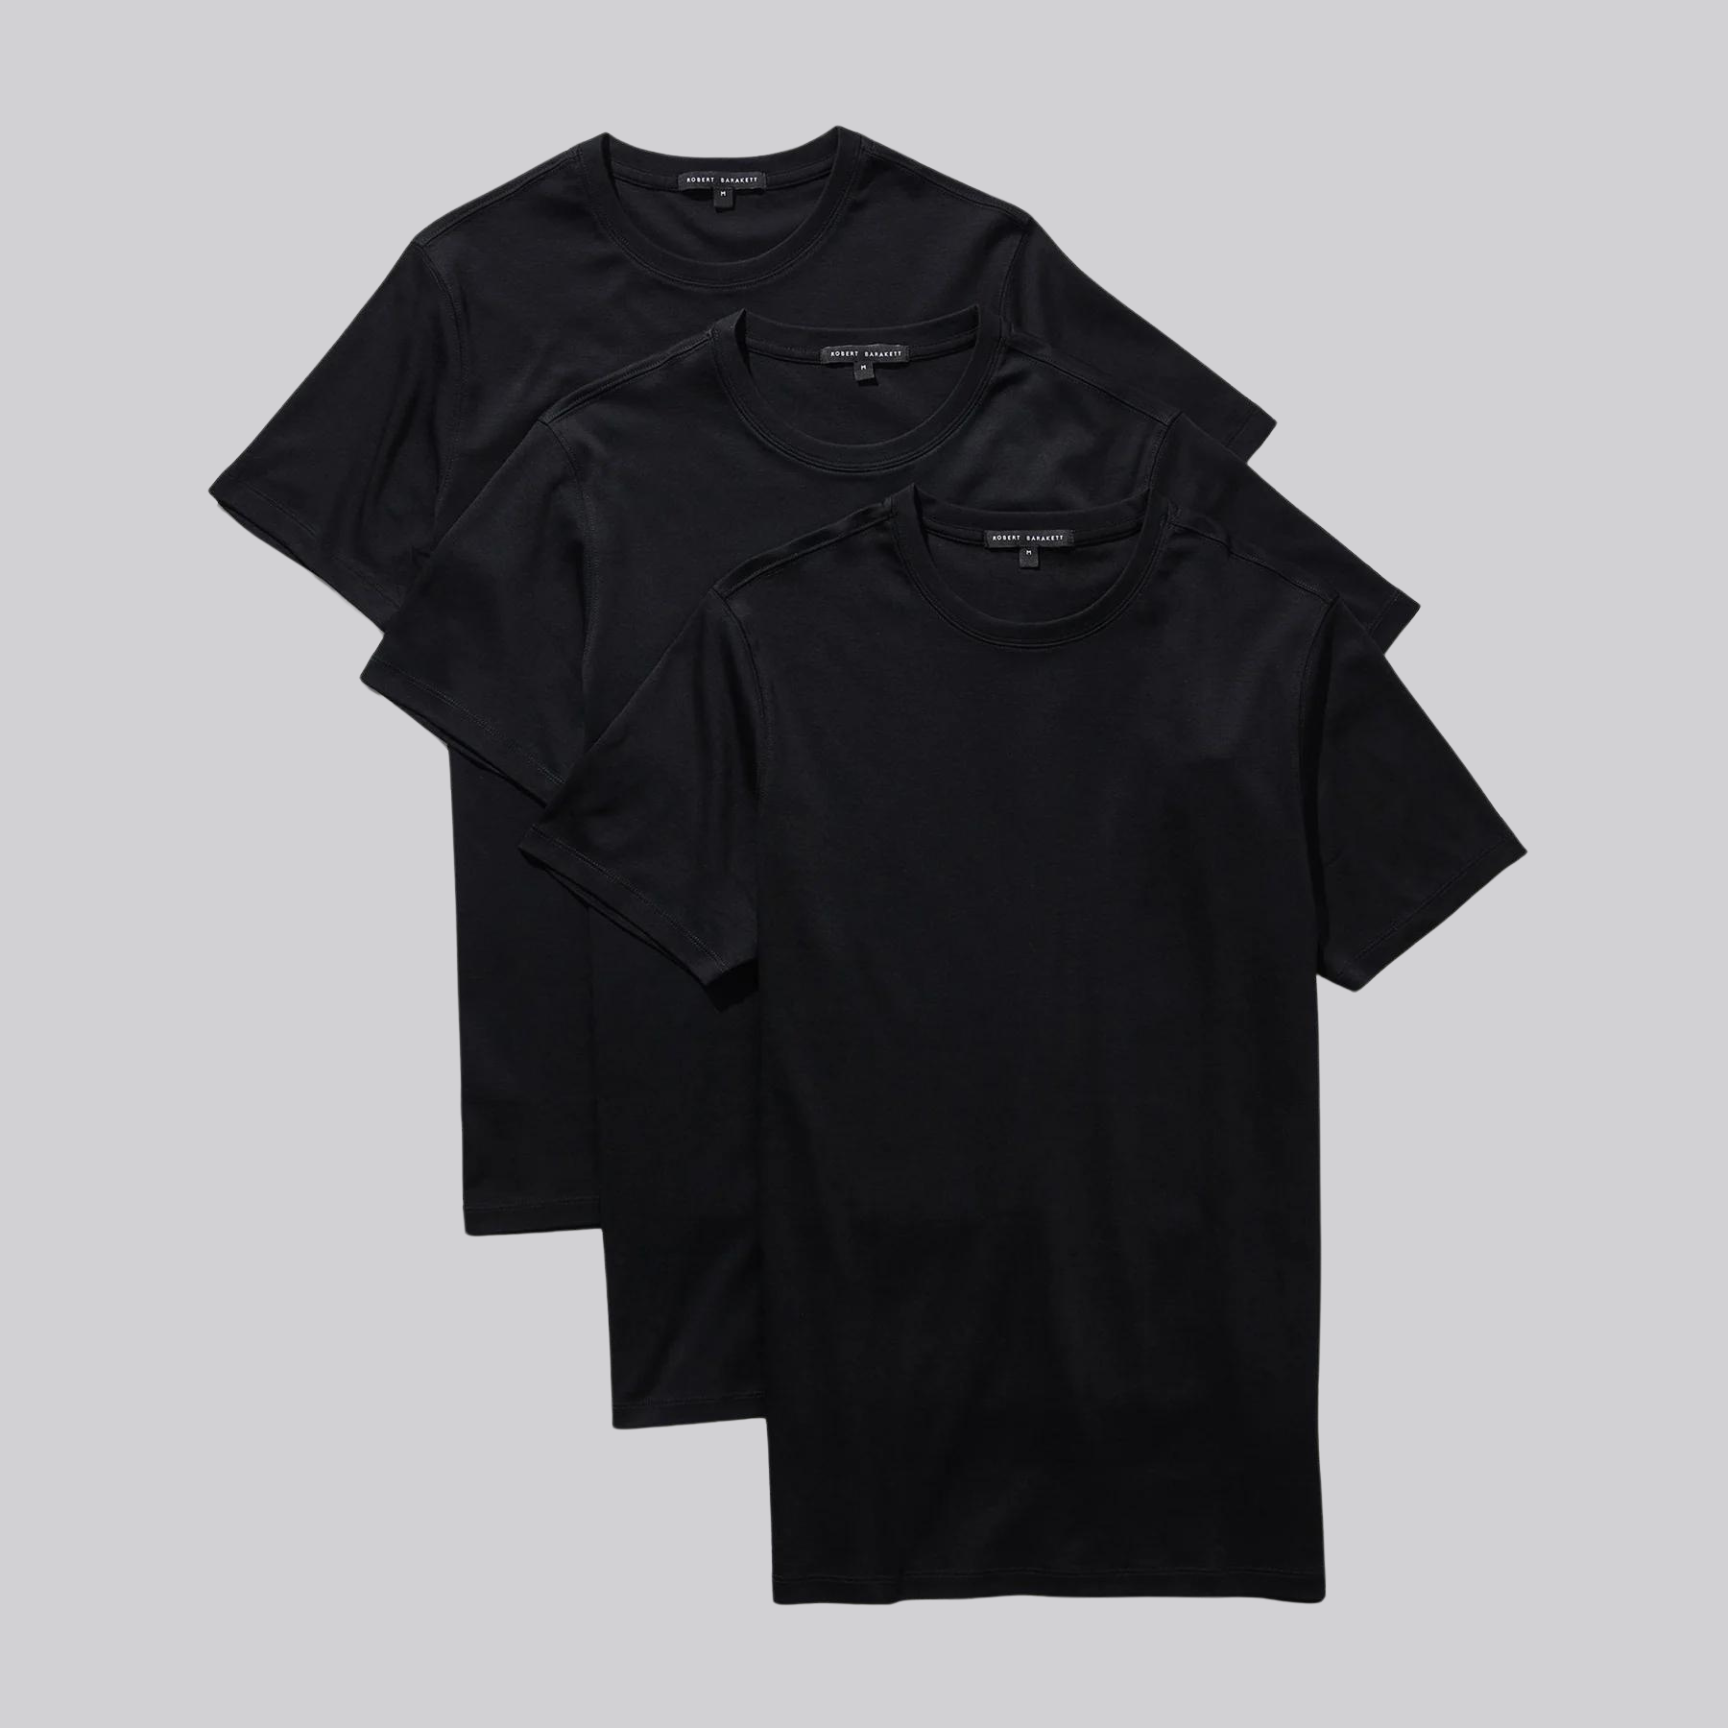 Lot Black T-Shirts